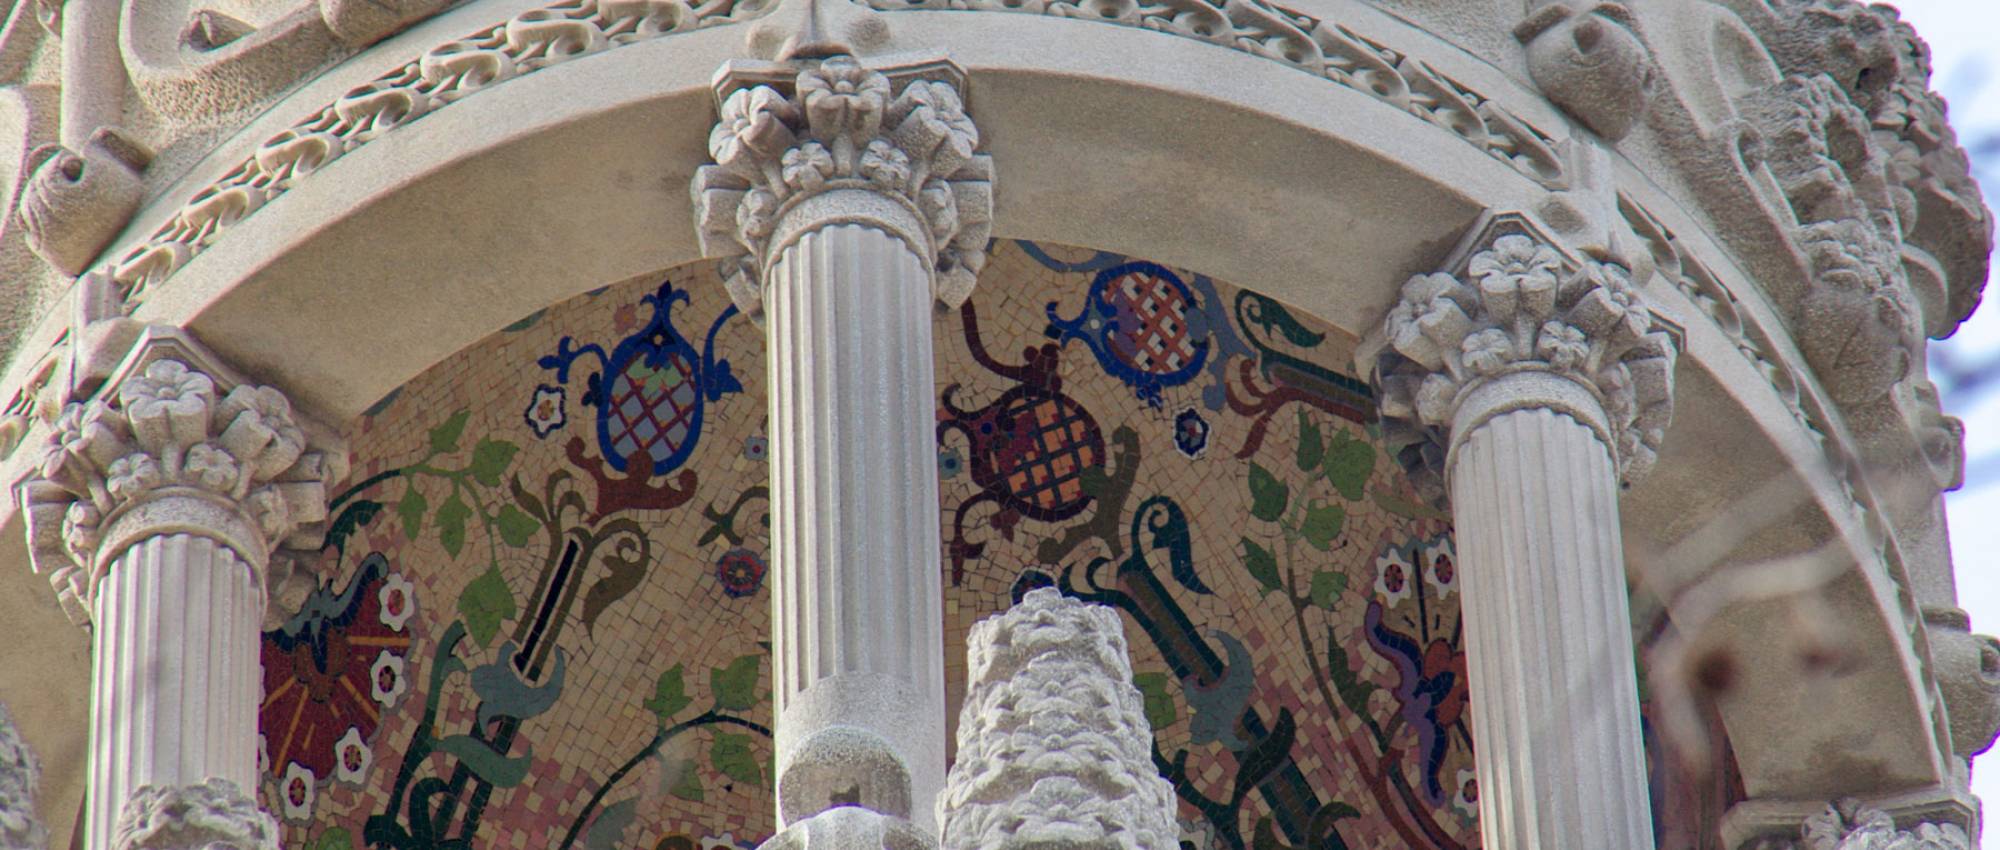 Mosaic on the ceiling of the Balcony tower. Amadalvarez / Wikimedia Commons. CC BY-SA 3.0